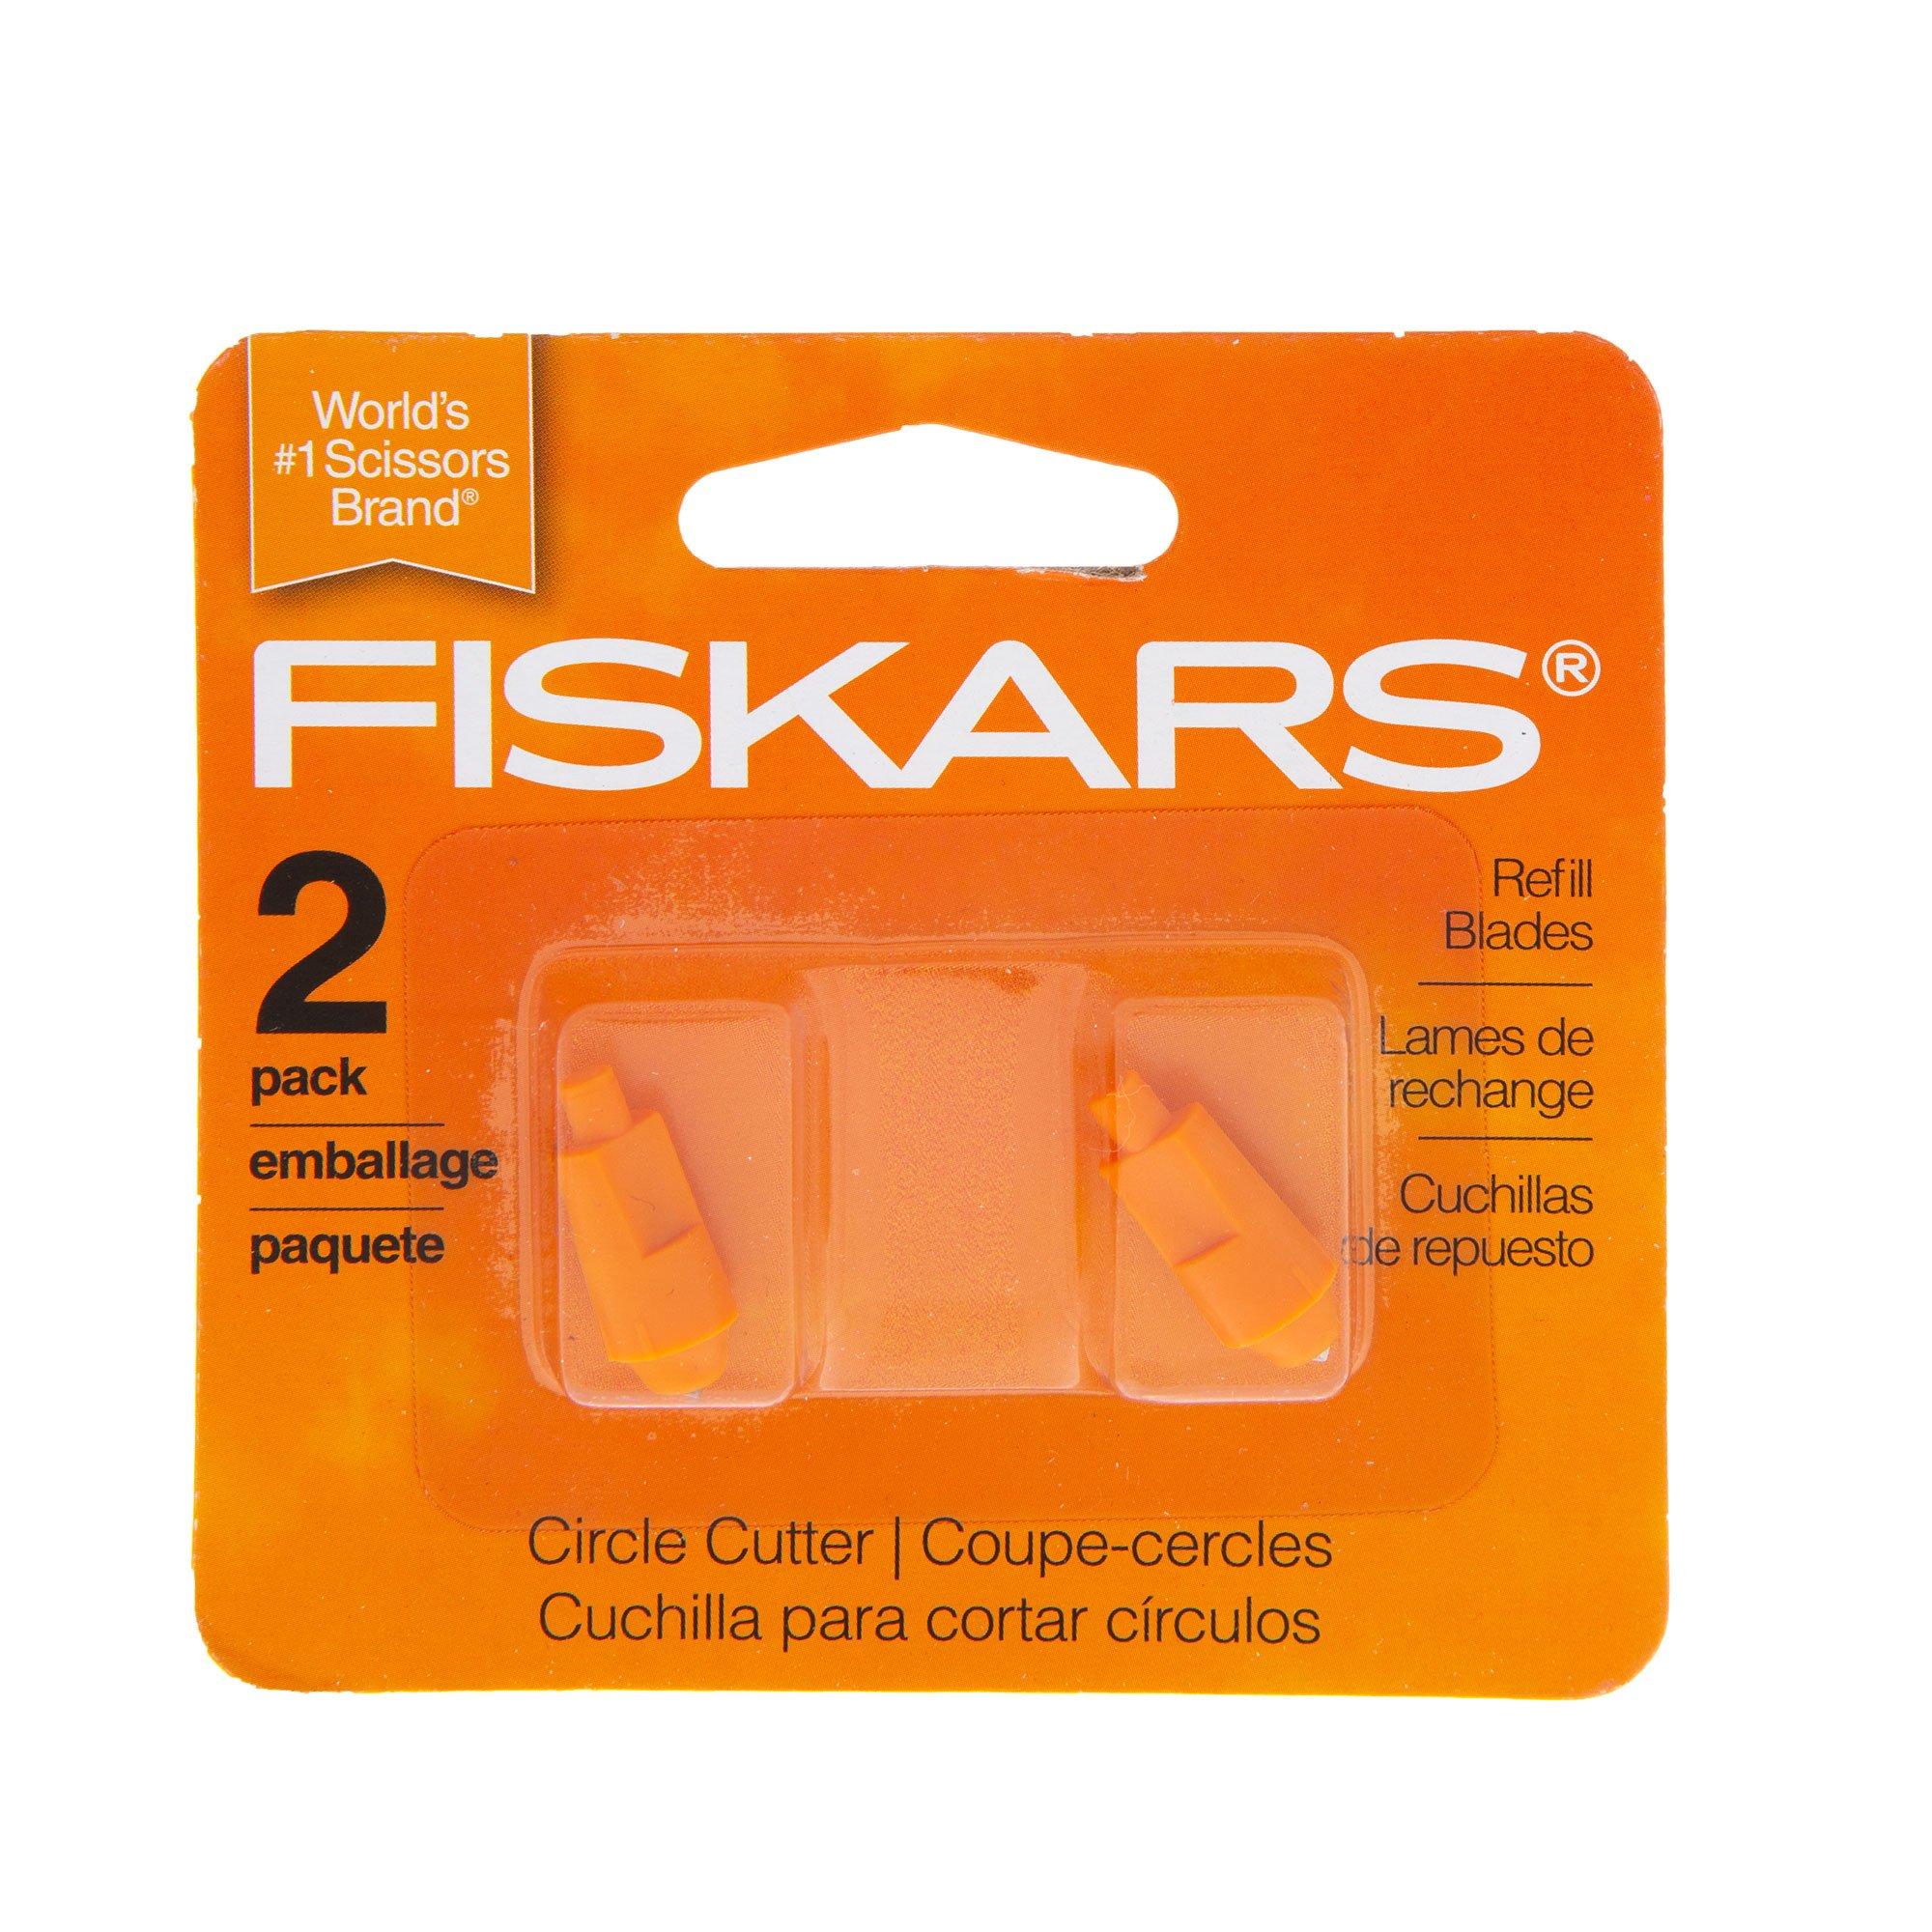 Fiskars Fabric Circle Cutter